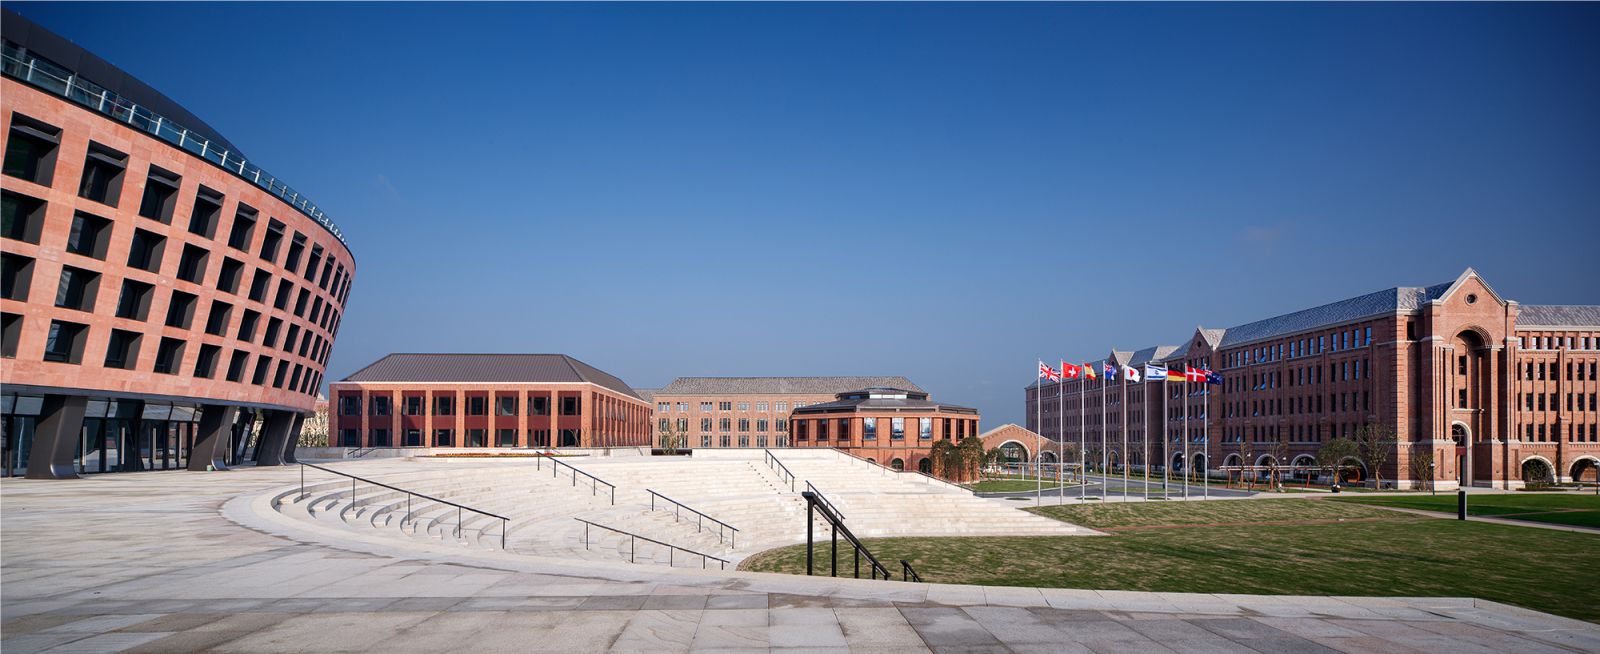 Campus of Zhejiang University